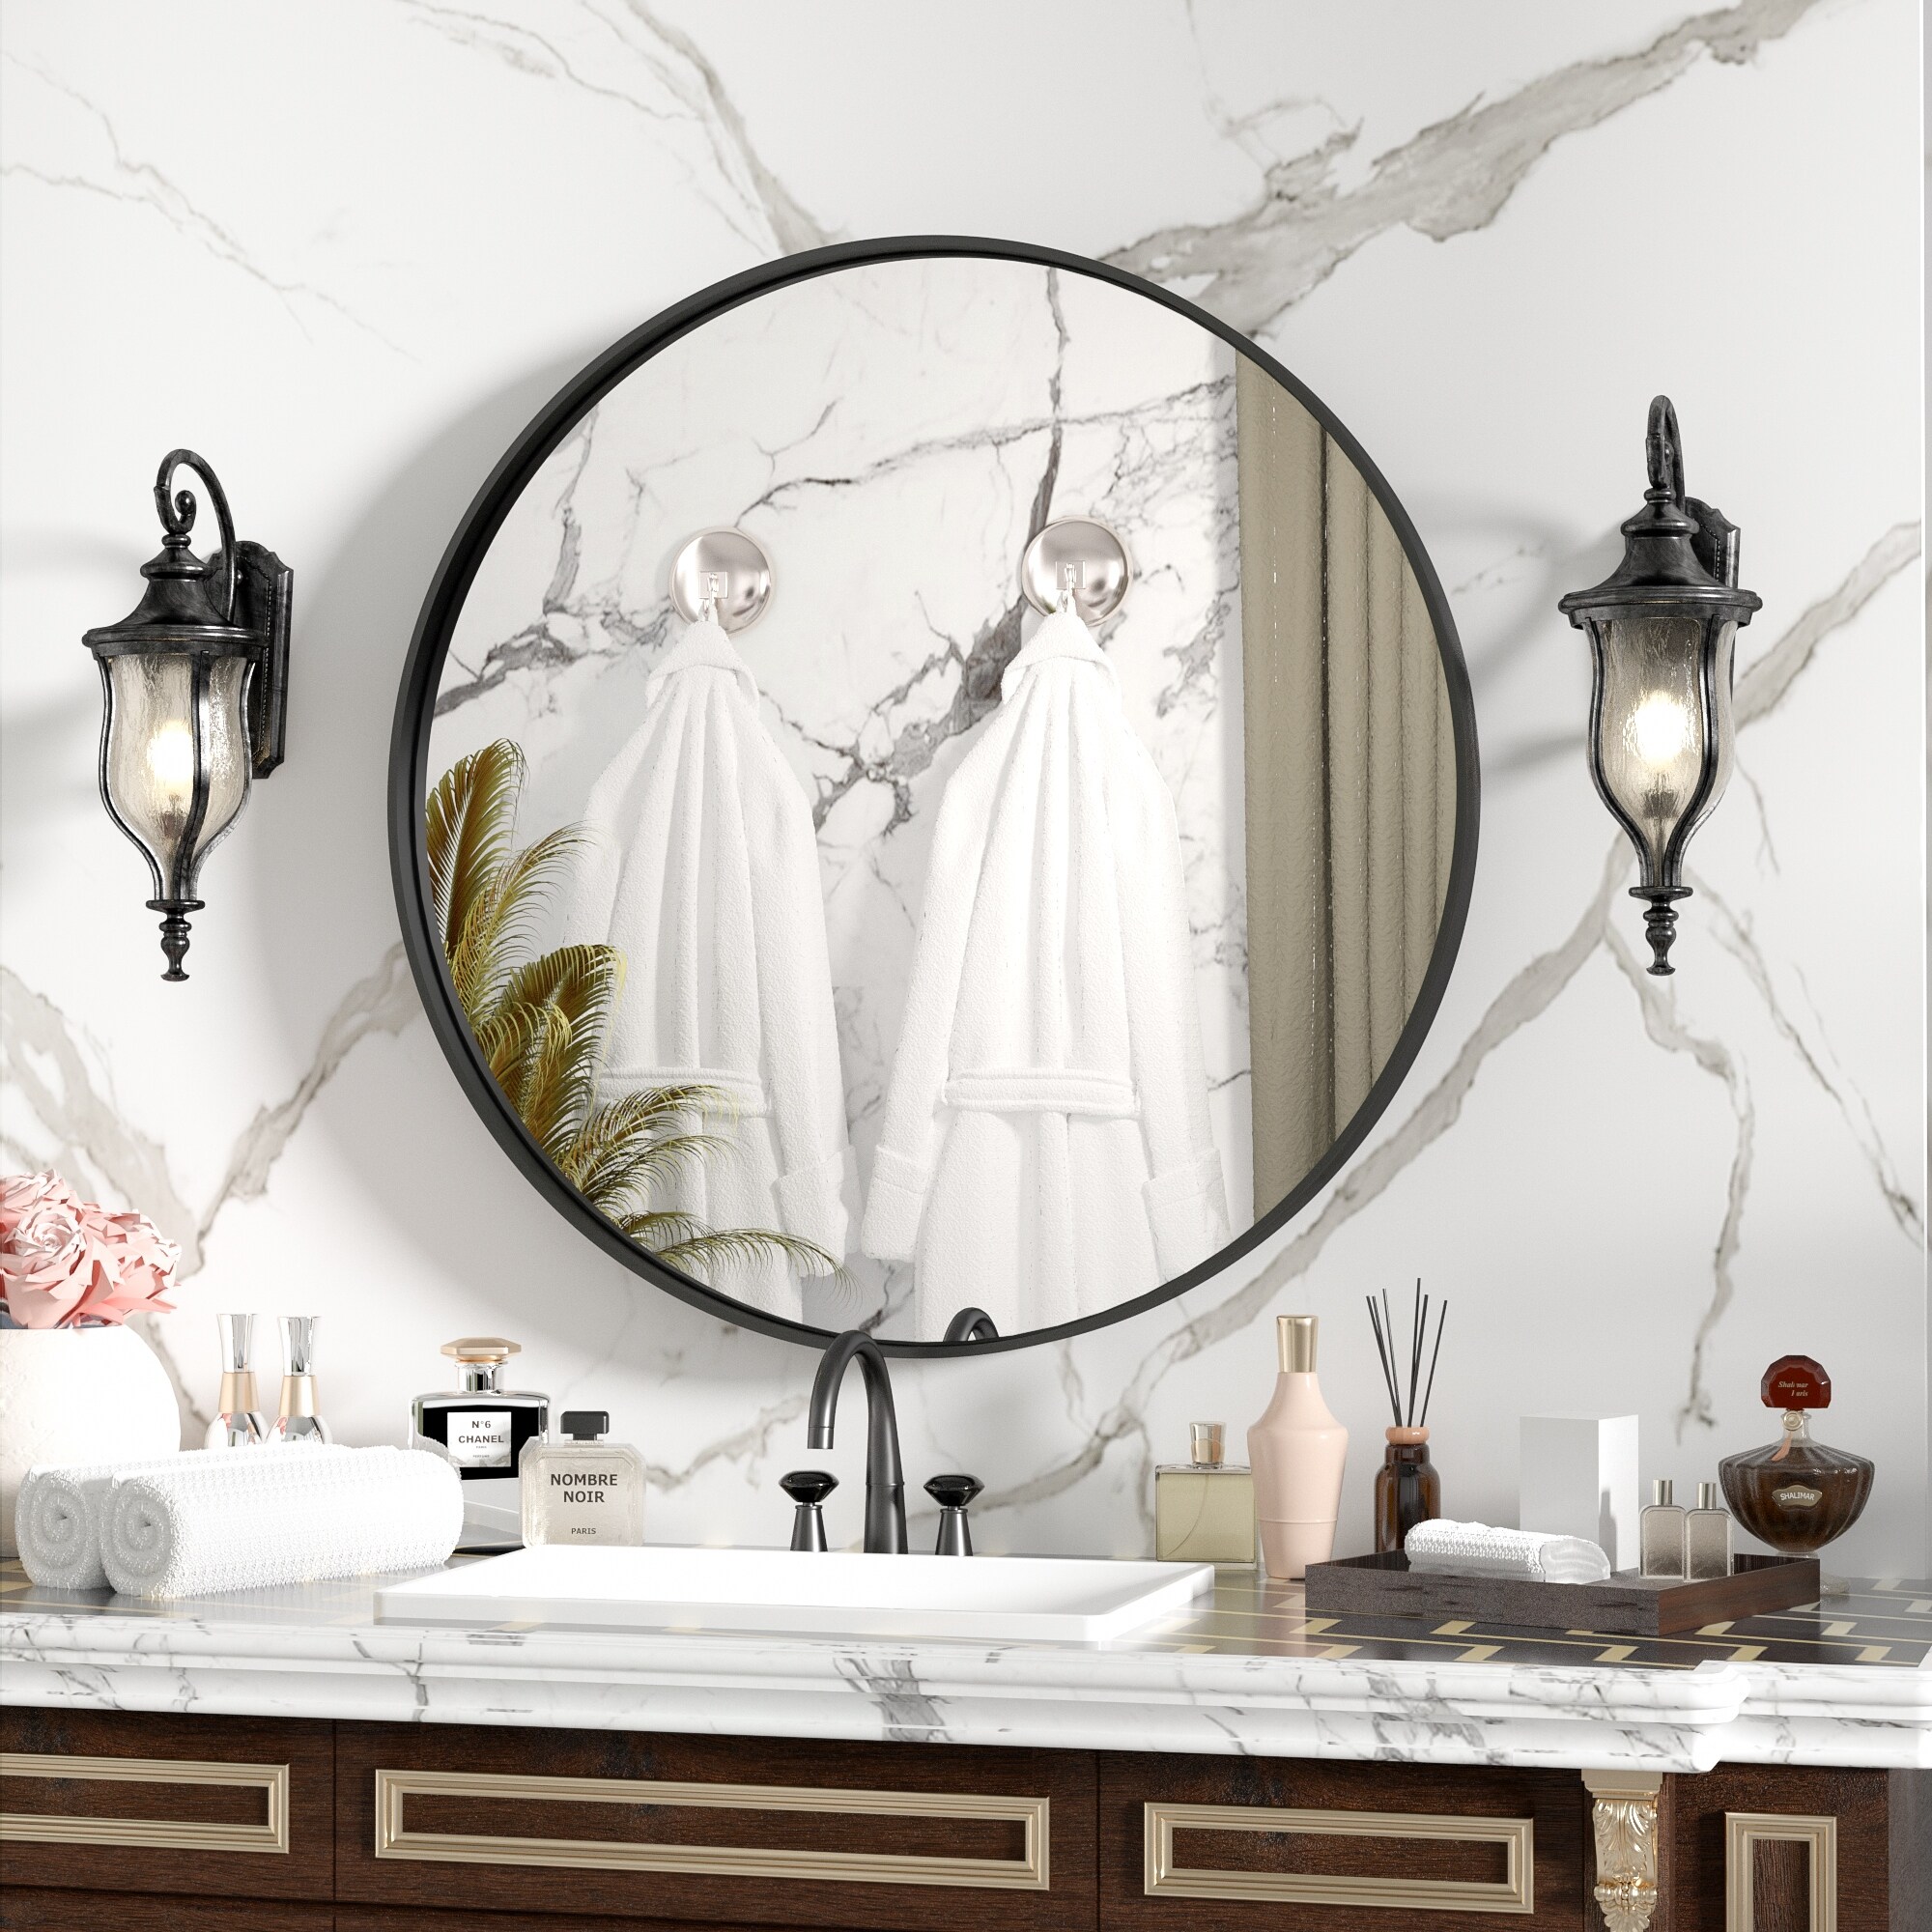 Pendleton Black Framed Wall Mirror - On Sale - Bed Bath & Beyond